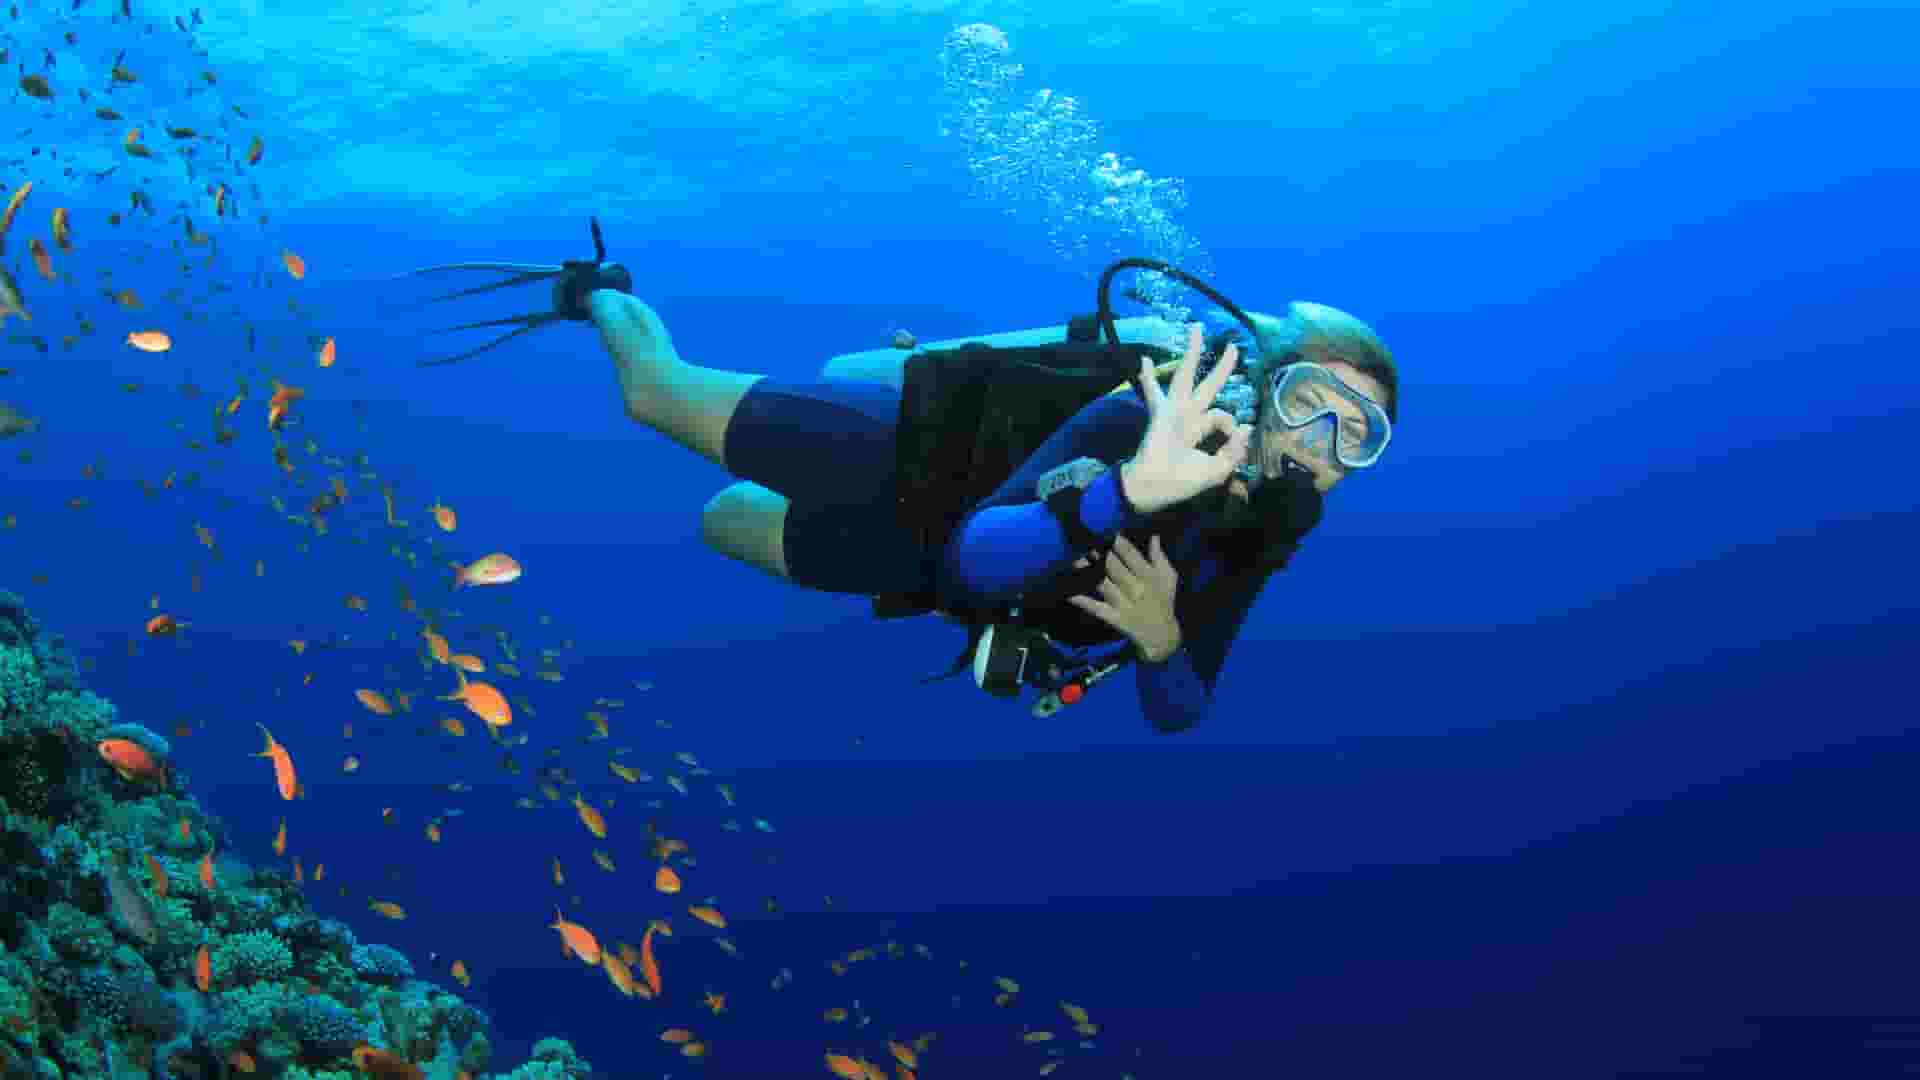 a person in scuba gear underwater